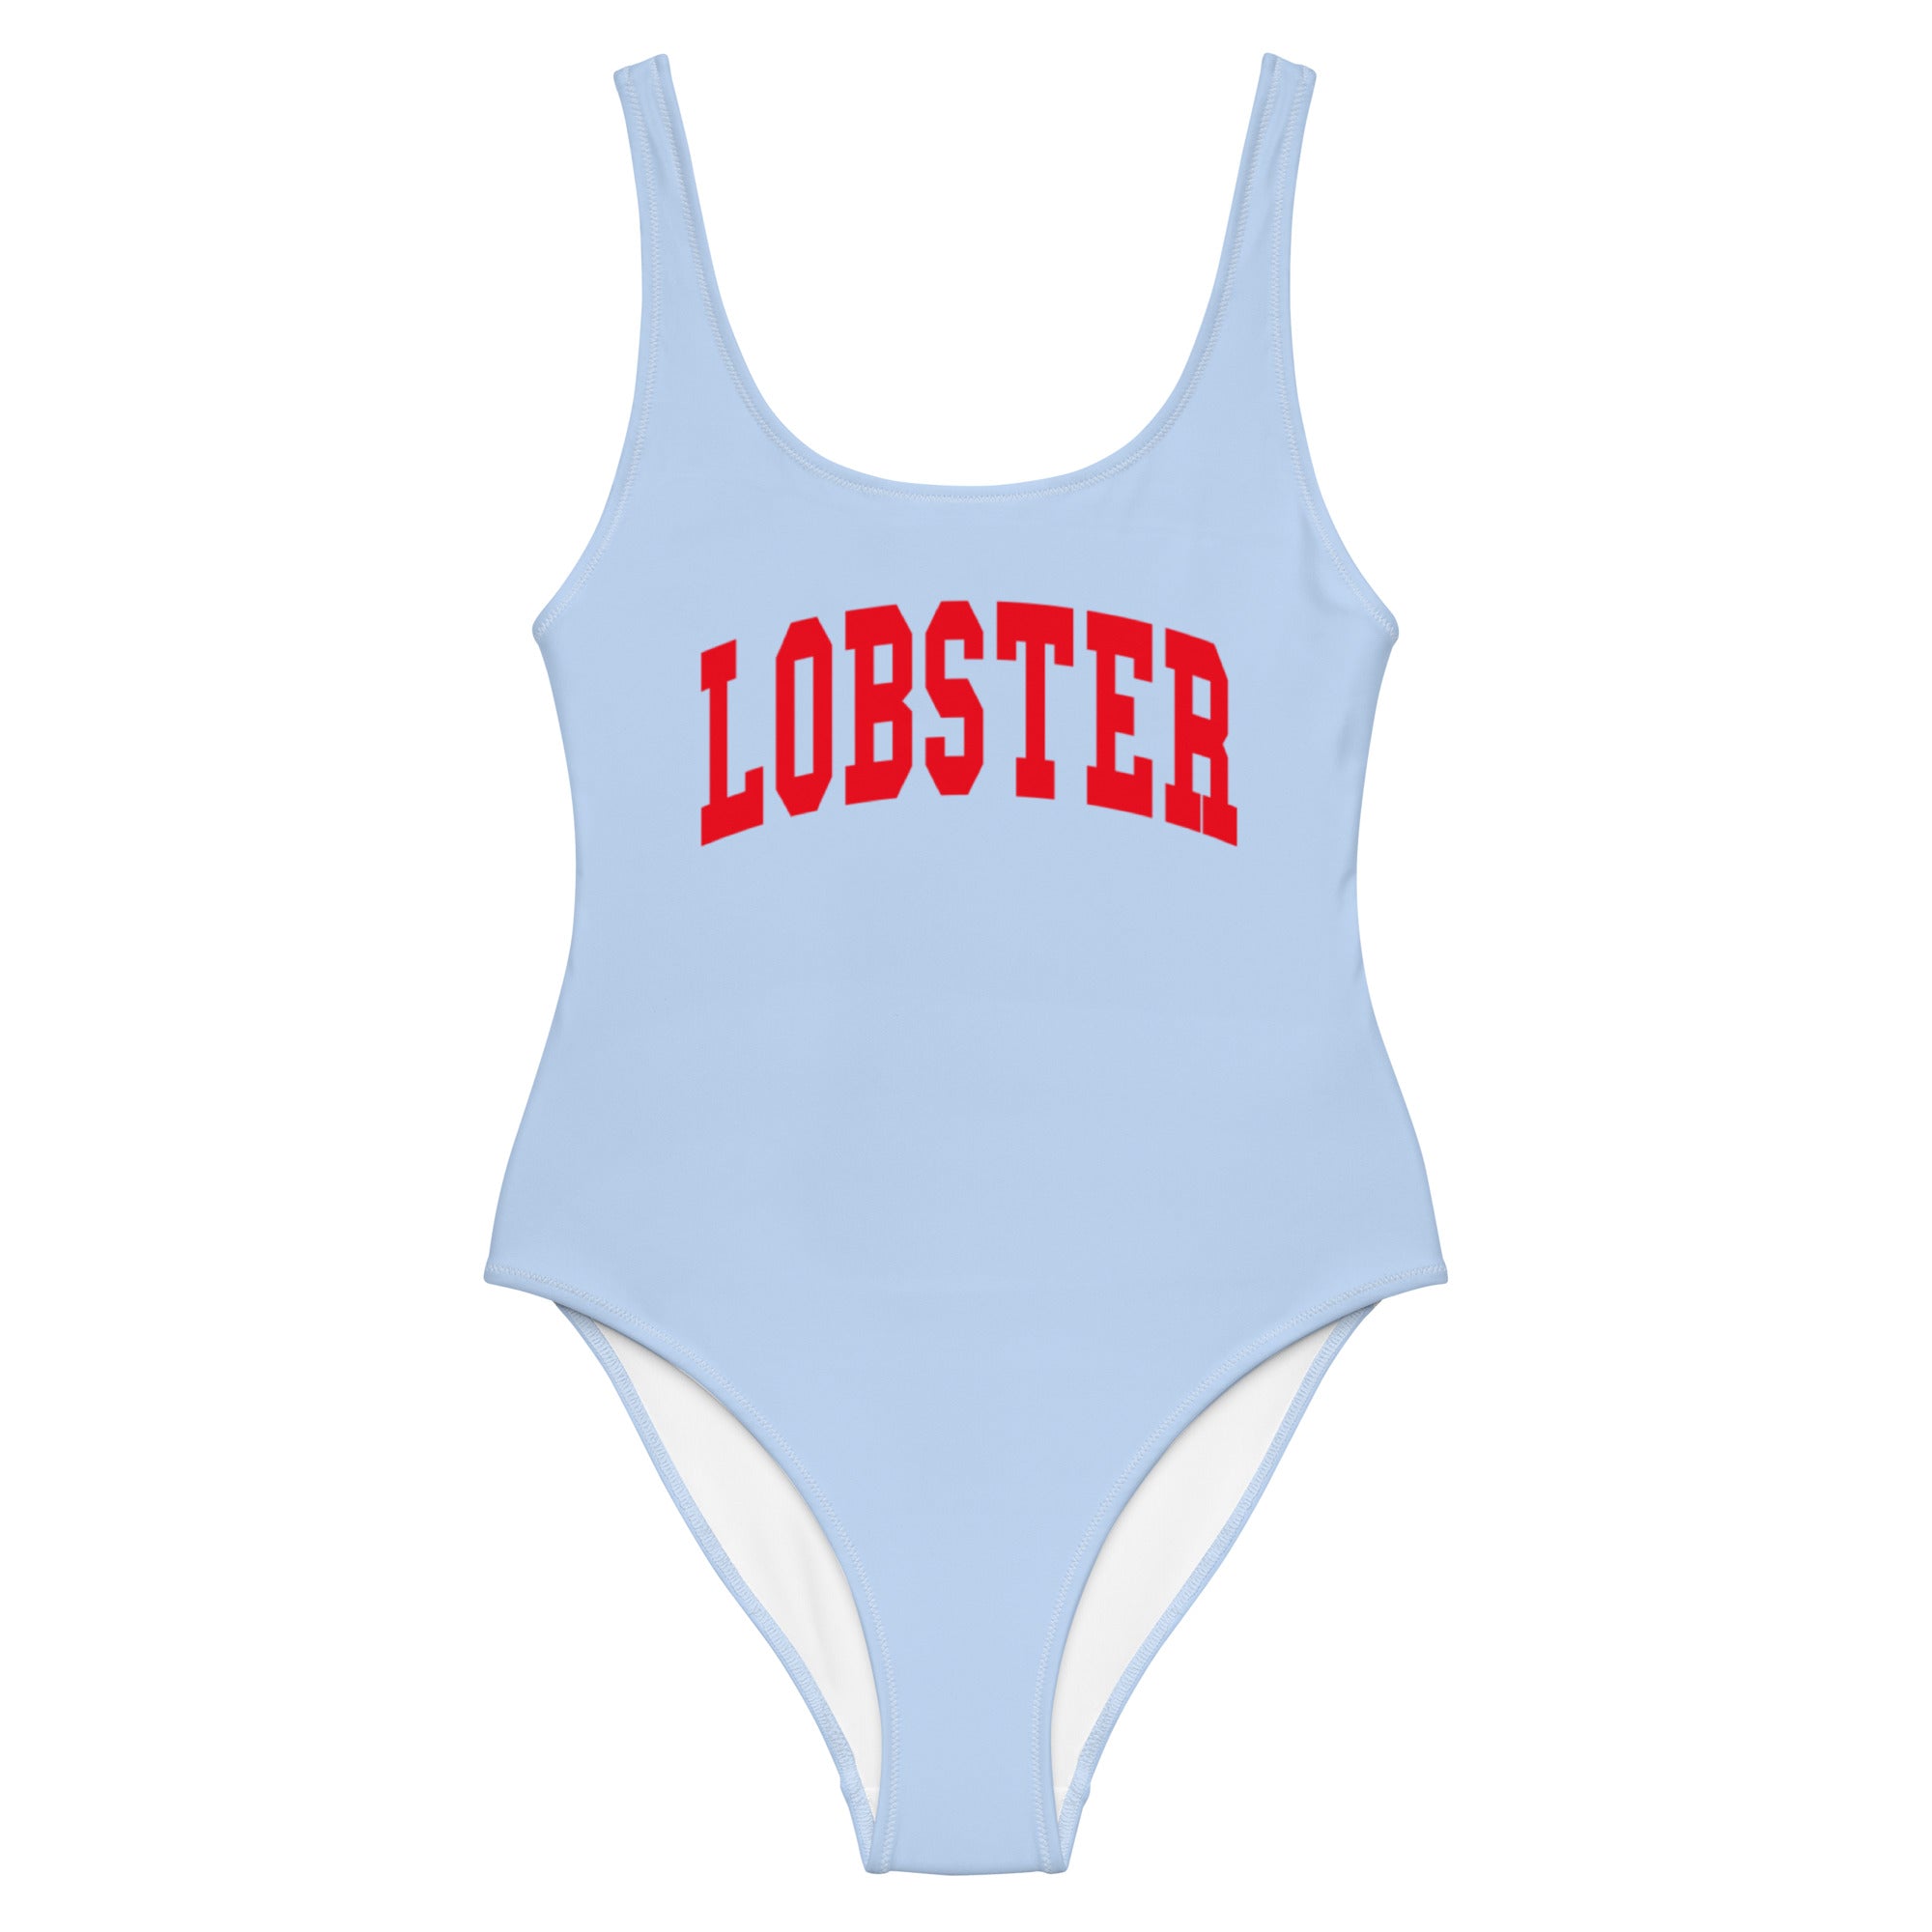 Lobster - Swimsuit - The Refined Spirit